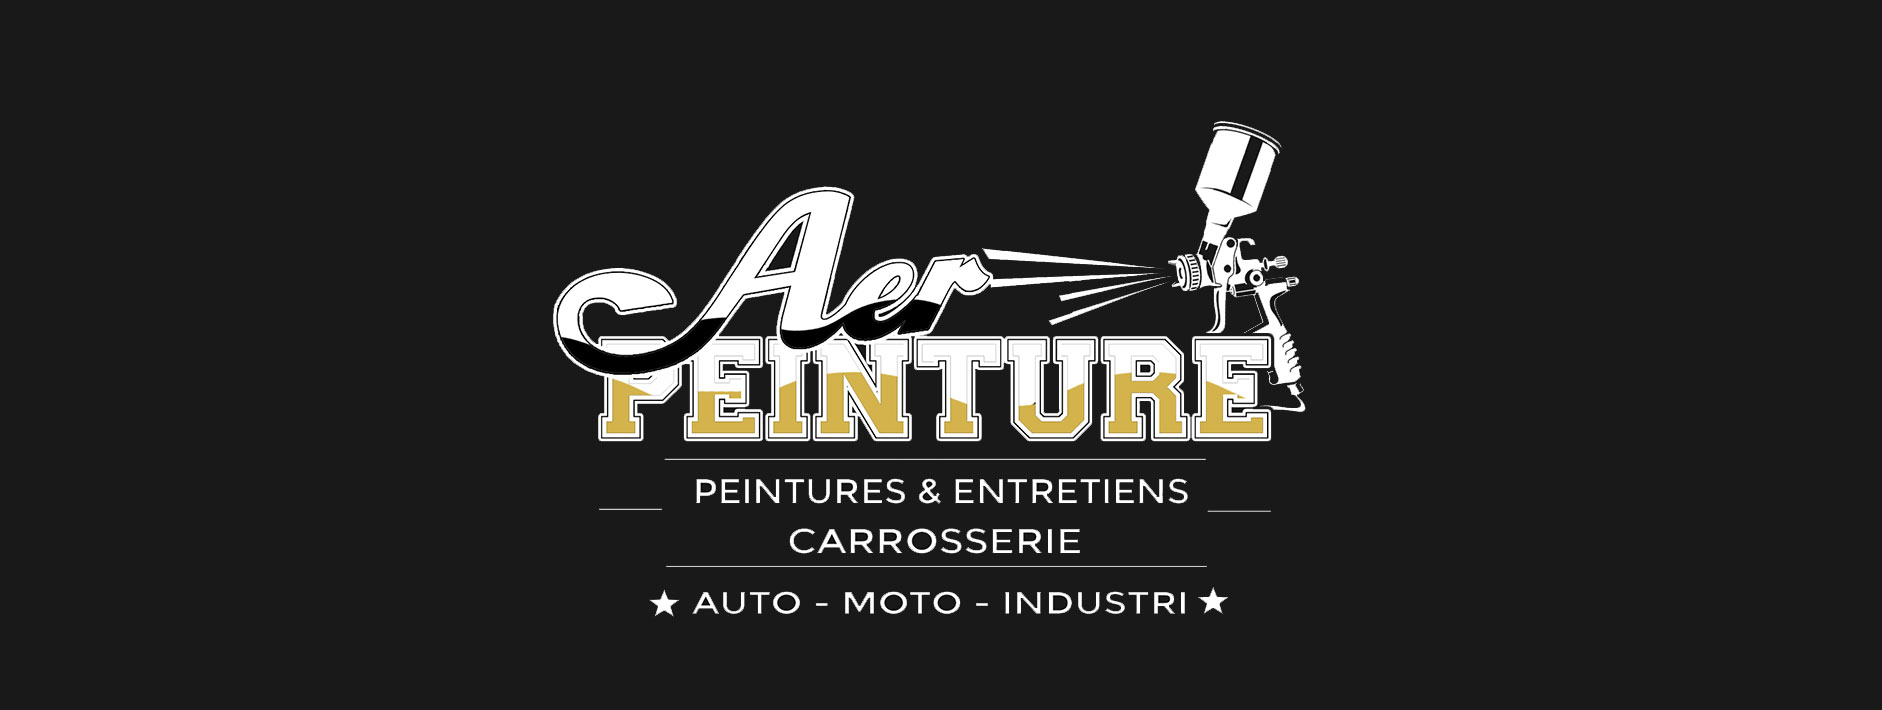 logo AER Peintures